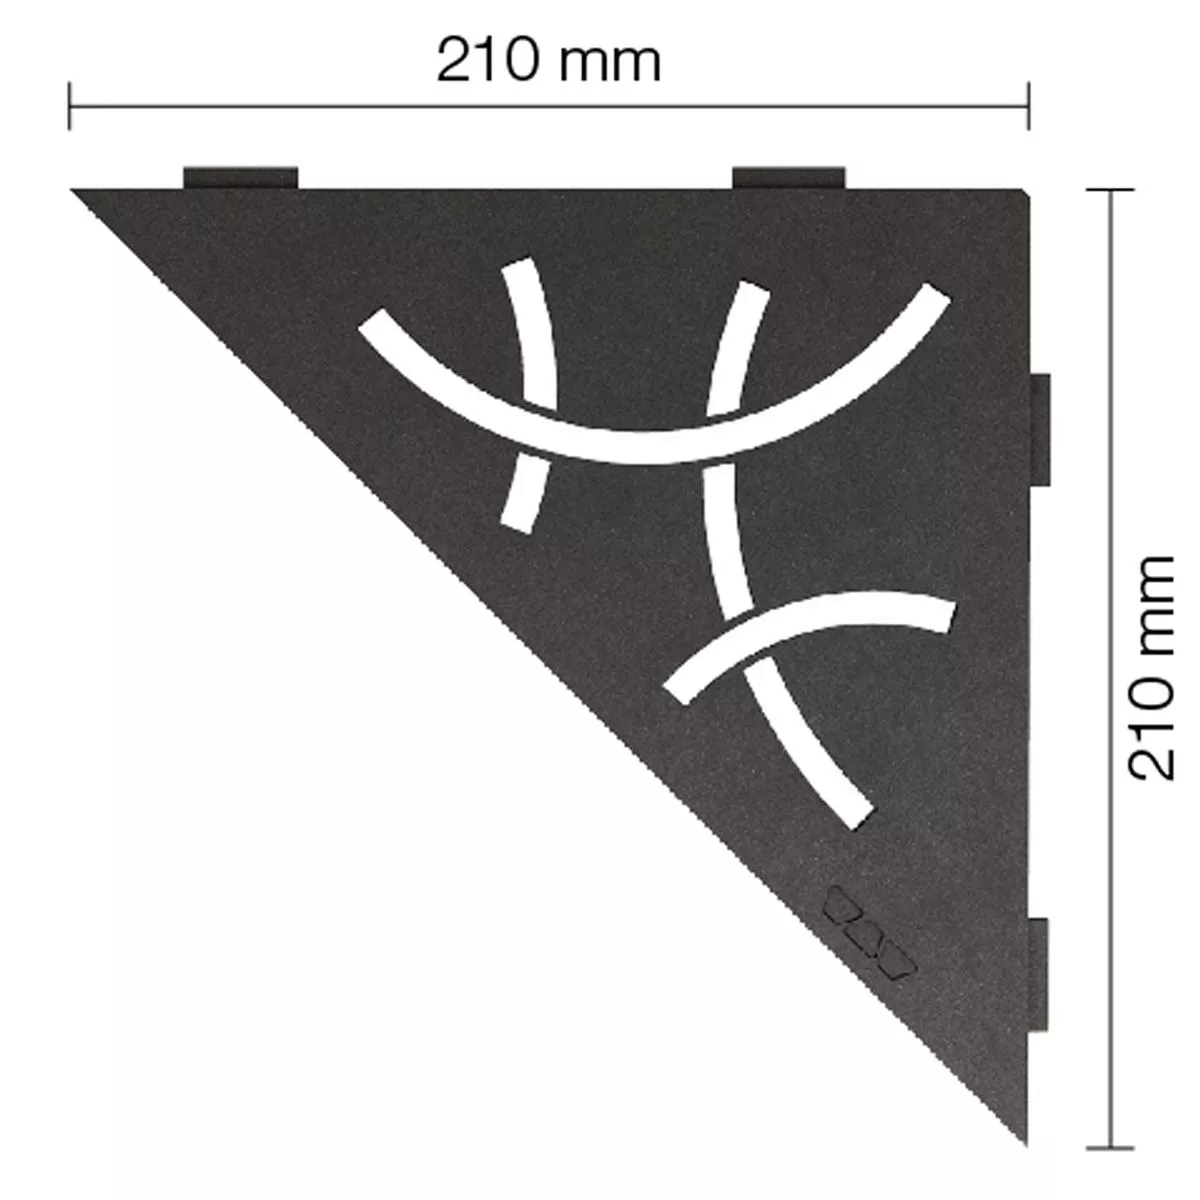 Schlüter wall shelf triangle 21x21cm Curve dark anthracite